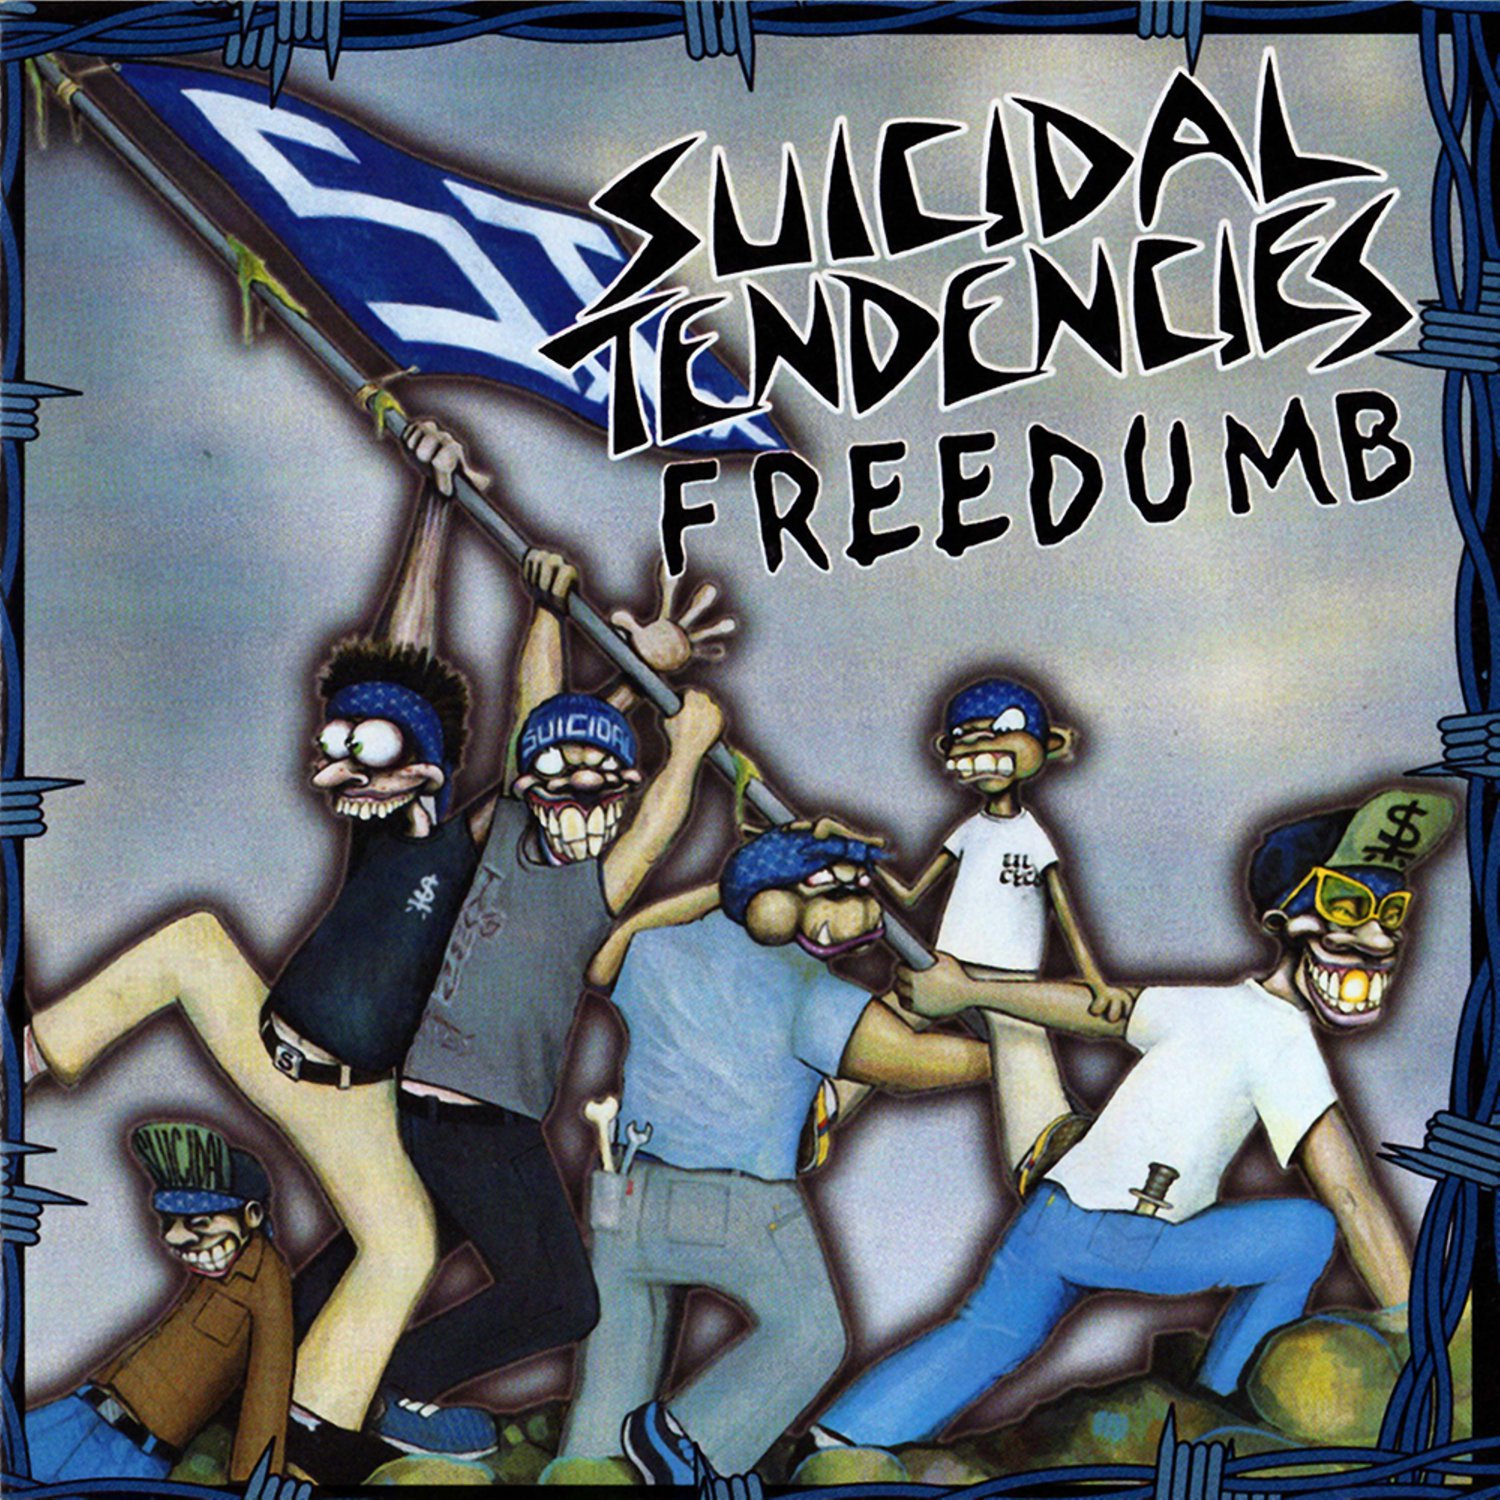 SUICIDAL TENDENCIES Freedumb BANNER Huge 4X4 Ft Fabric Poster Tapestry Flag Print album cover art